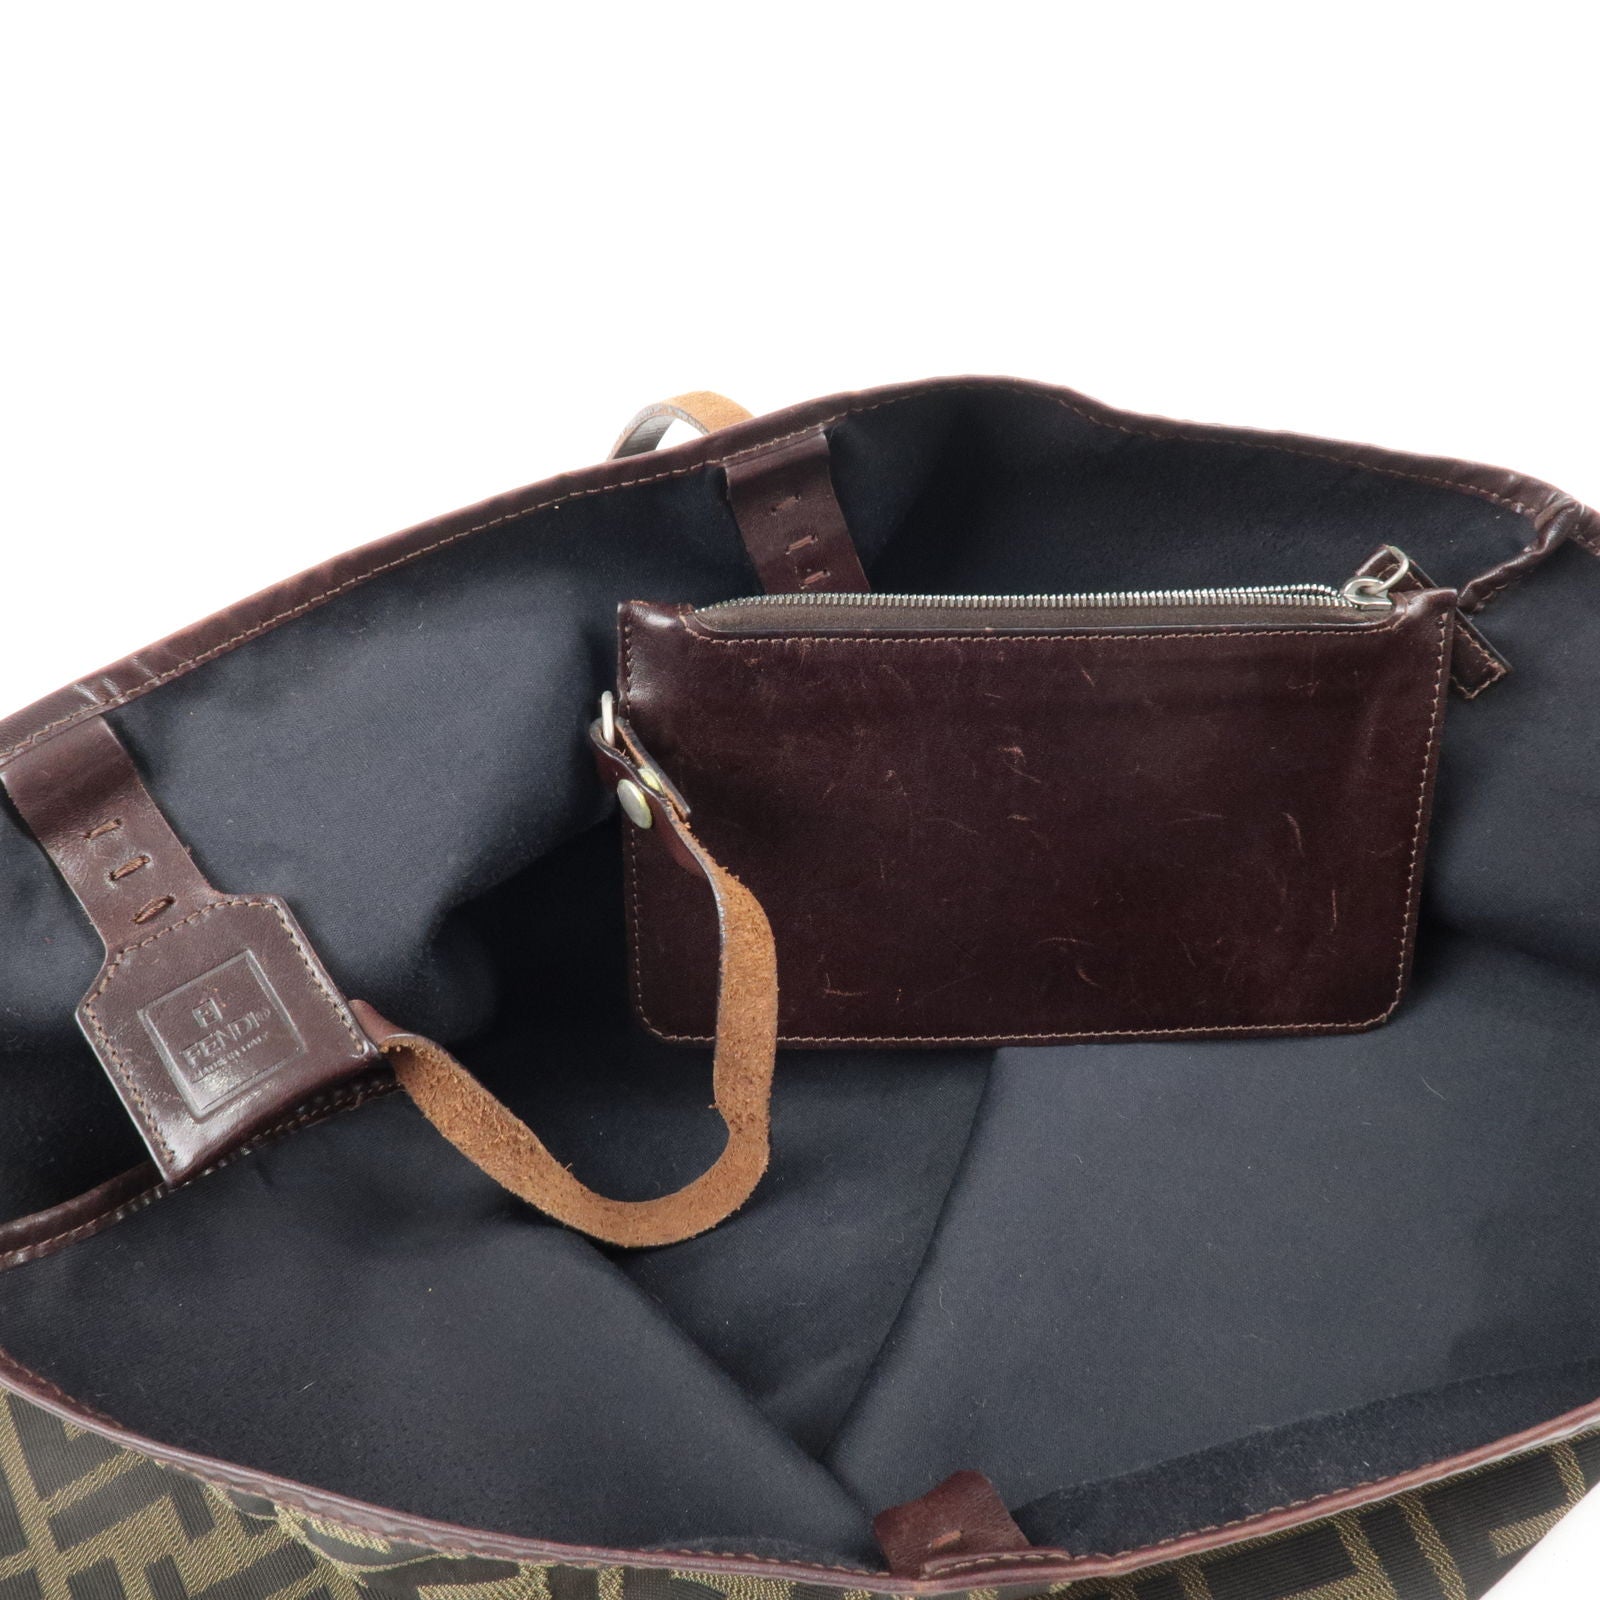 FENDI-Zucca-Canvas-Leather-Hand-Bag-Tote-Bag-Khaki-Black – dct